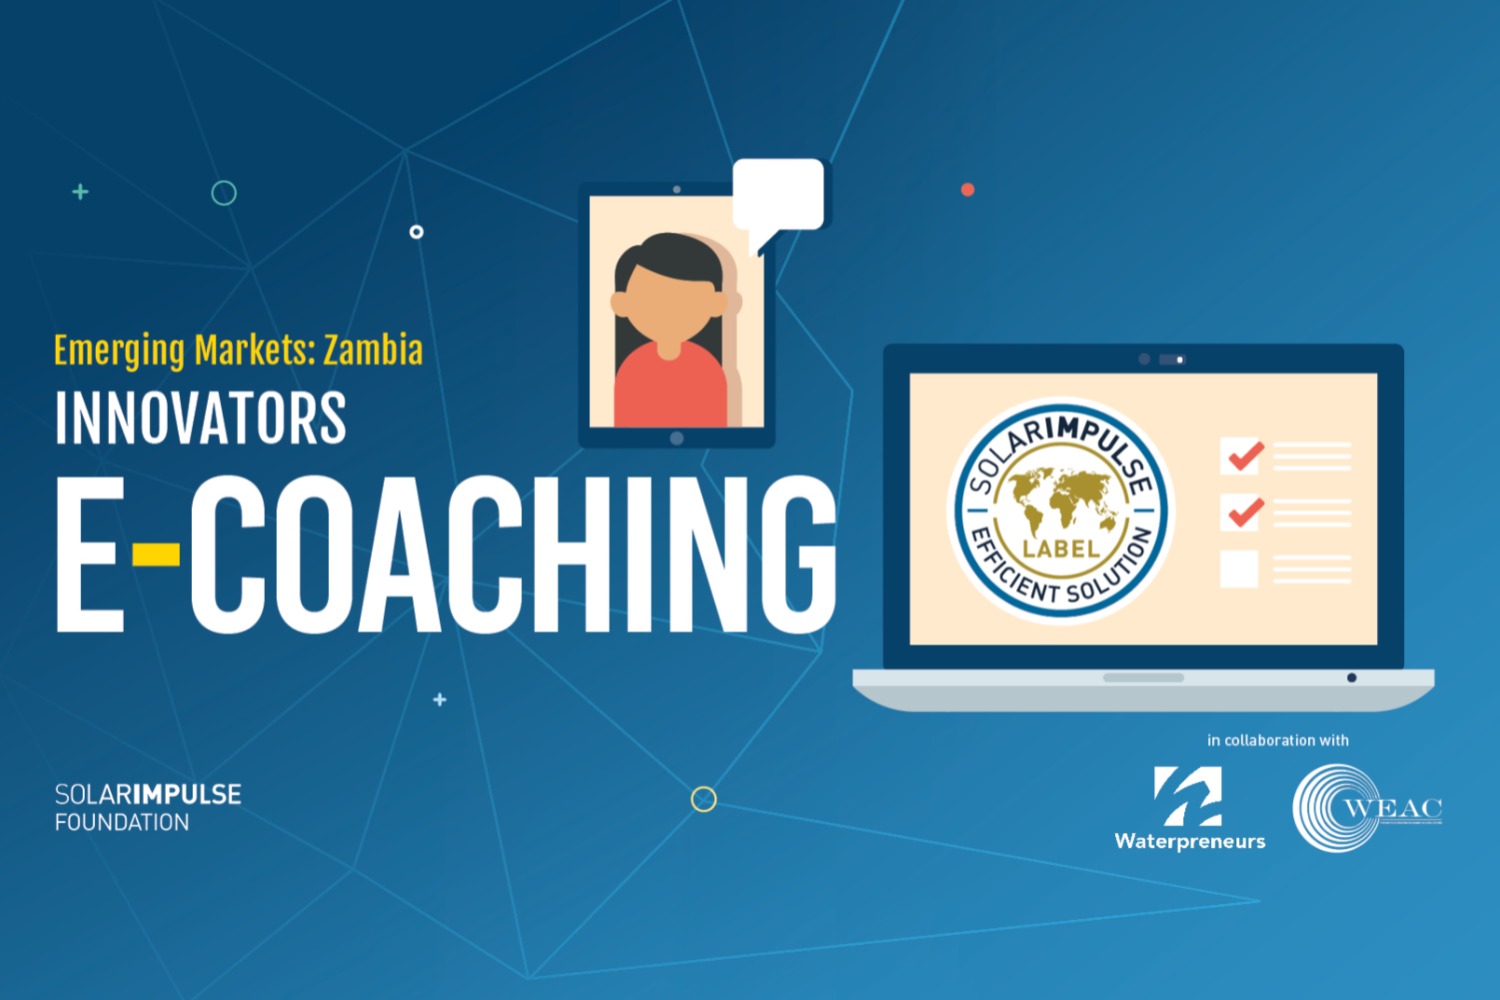 E-coaching - "Innovatori nei mercati emergenti